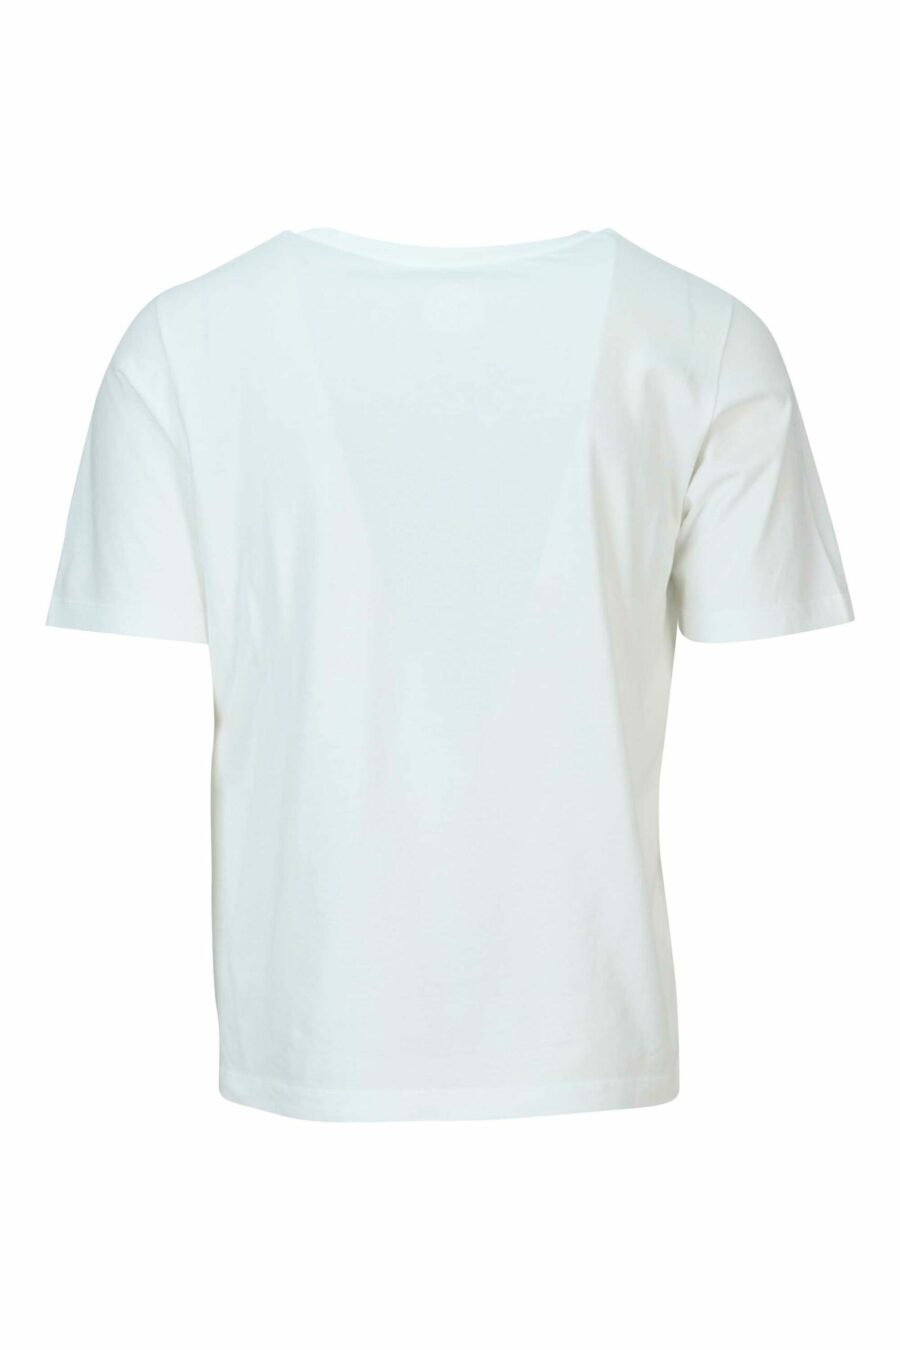 T-shirt oversize branca com maxilogue lilás - 8054148463342 1 scaled